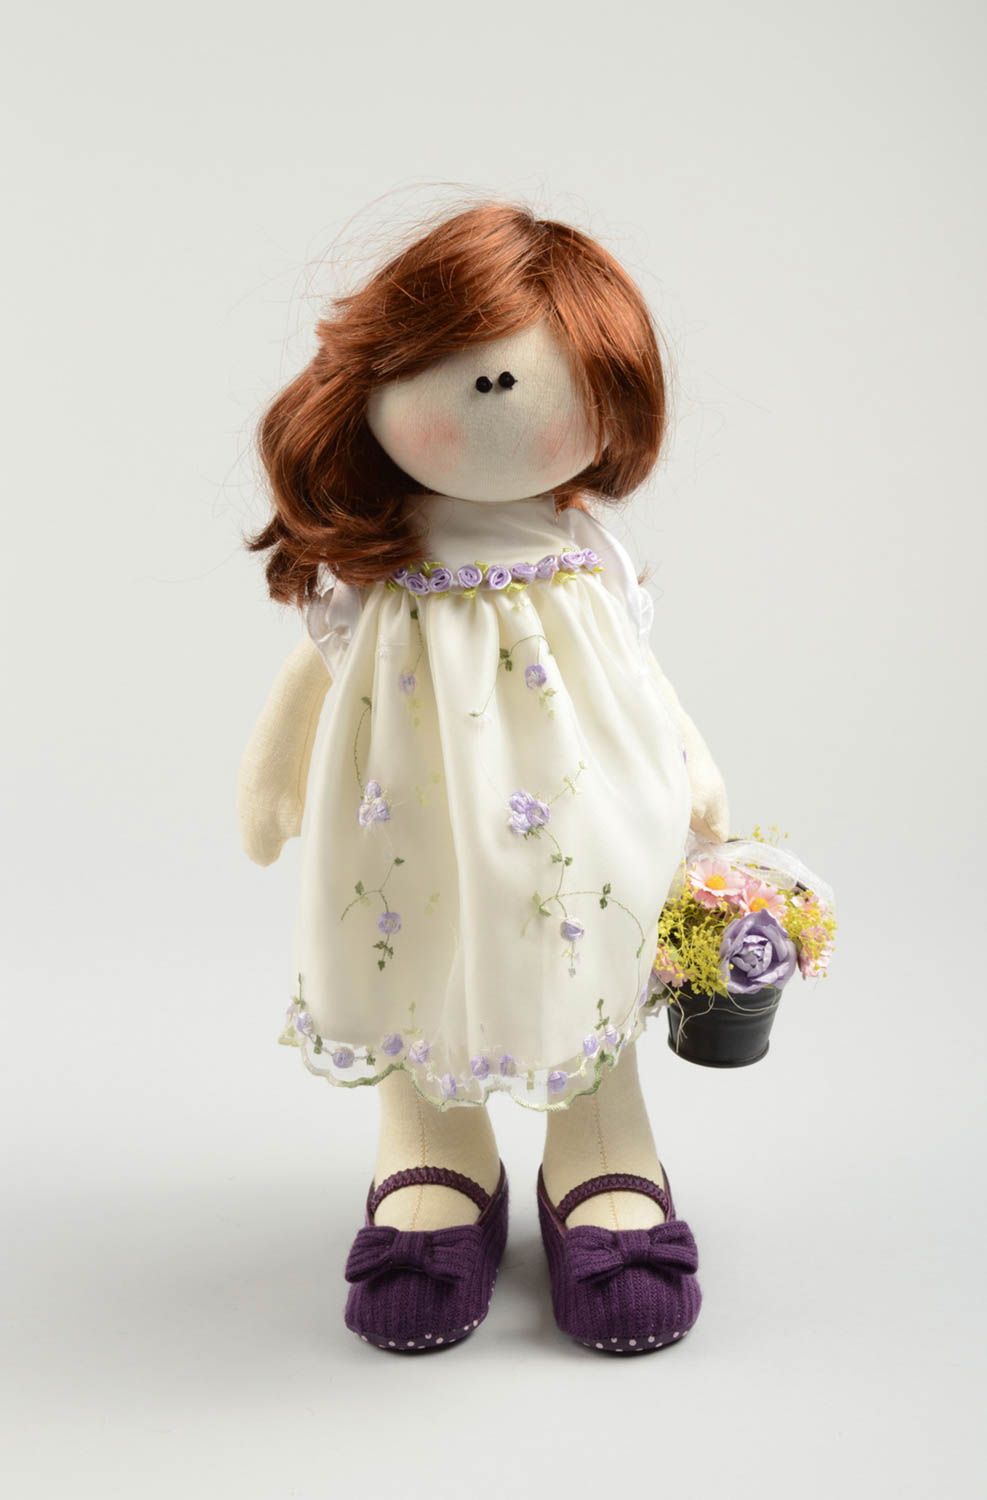 Beautiful handmade rag doll best toys for kids room decor ideas gift ideas photo 1